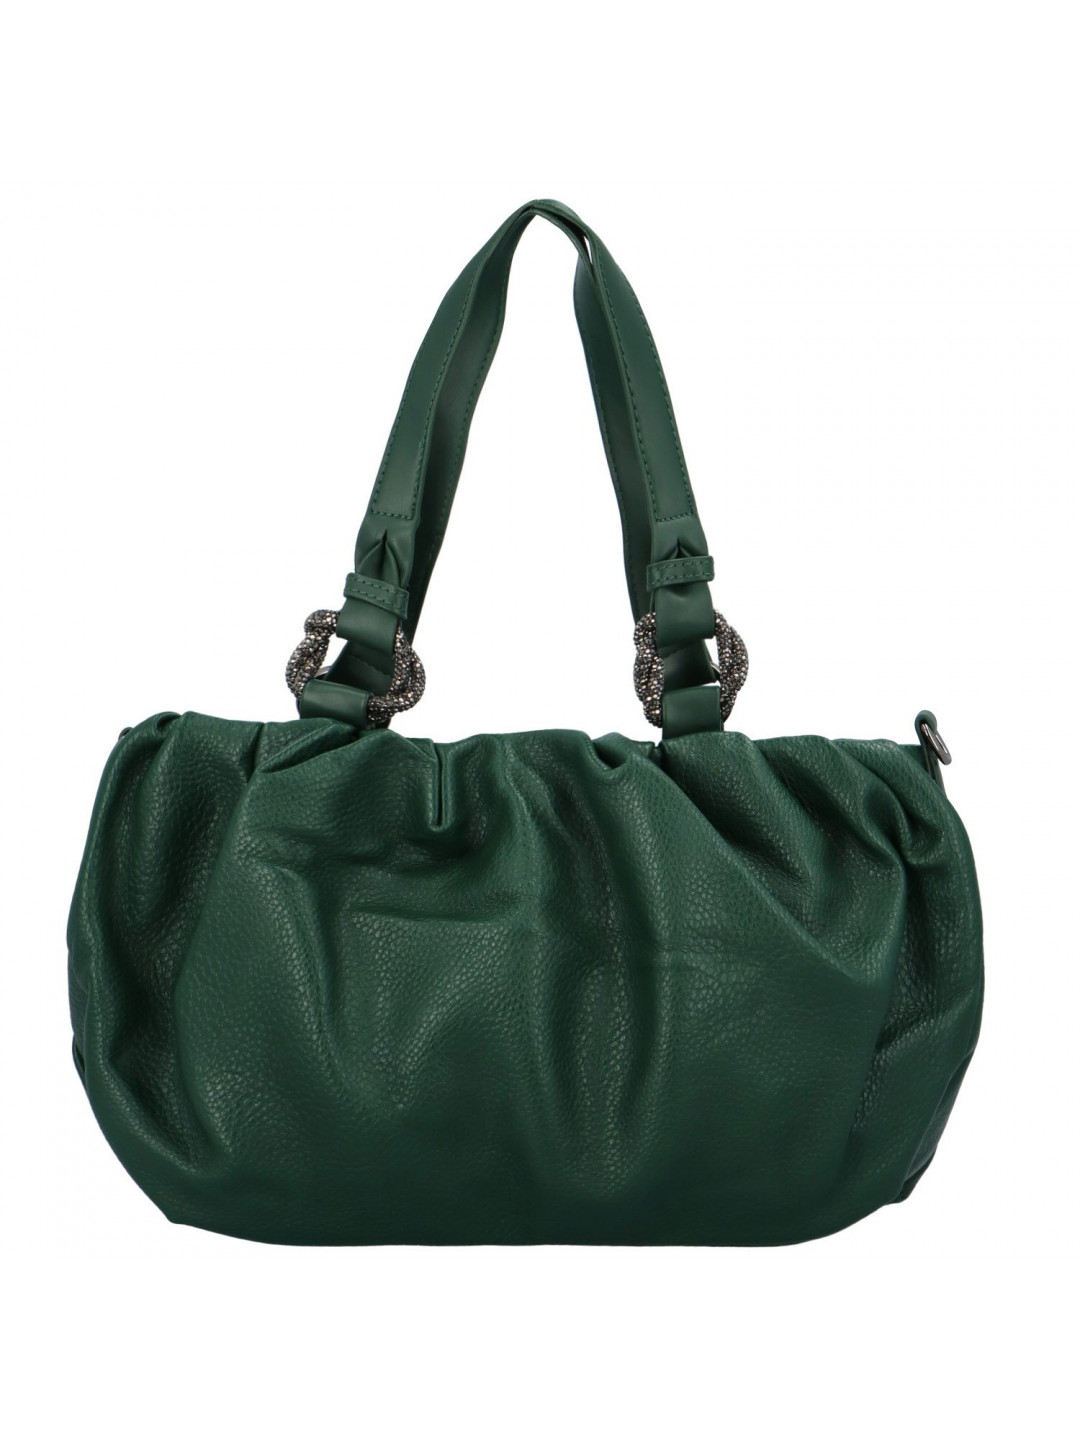 Dámská kabelka přes rameno zelená – MariaC Aewo